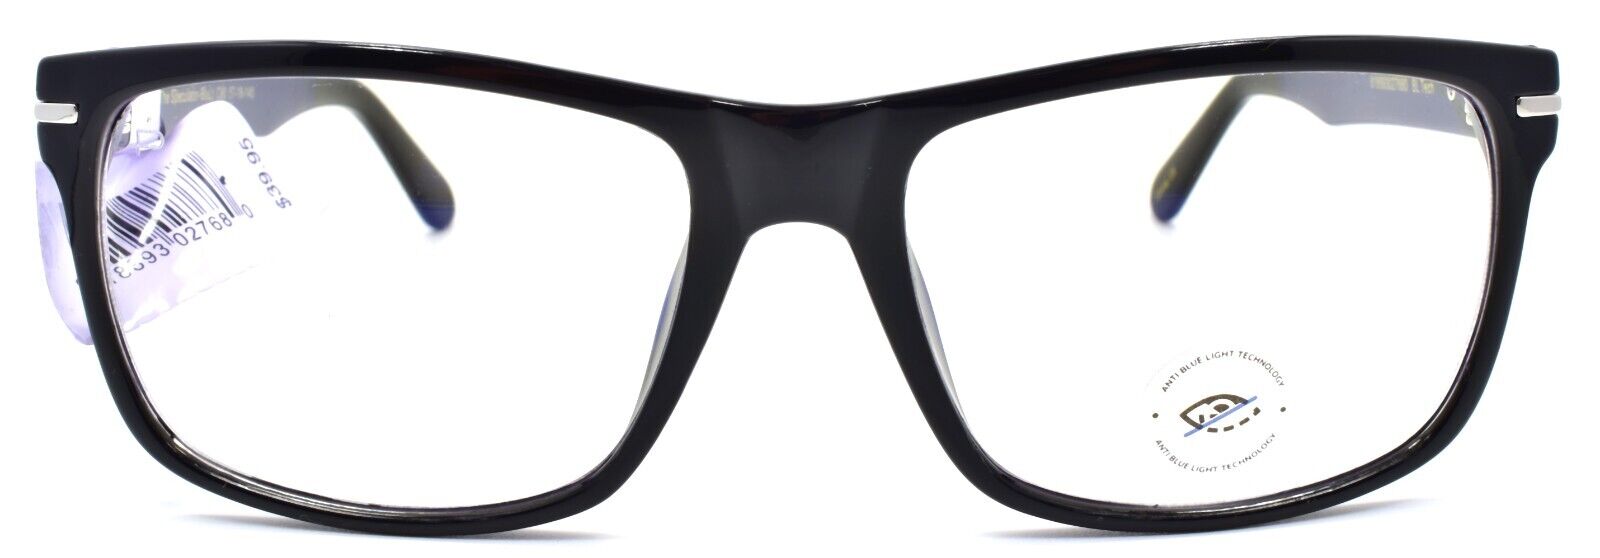 2-Prive Revaux The Speculator Eyeglasses Blue Light Blocking RX-ready Black-818893027680-IKSpecs